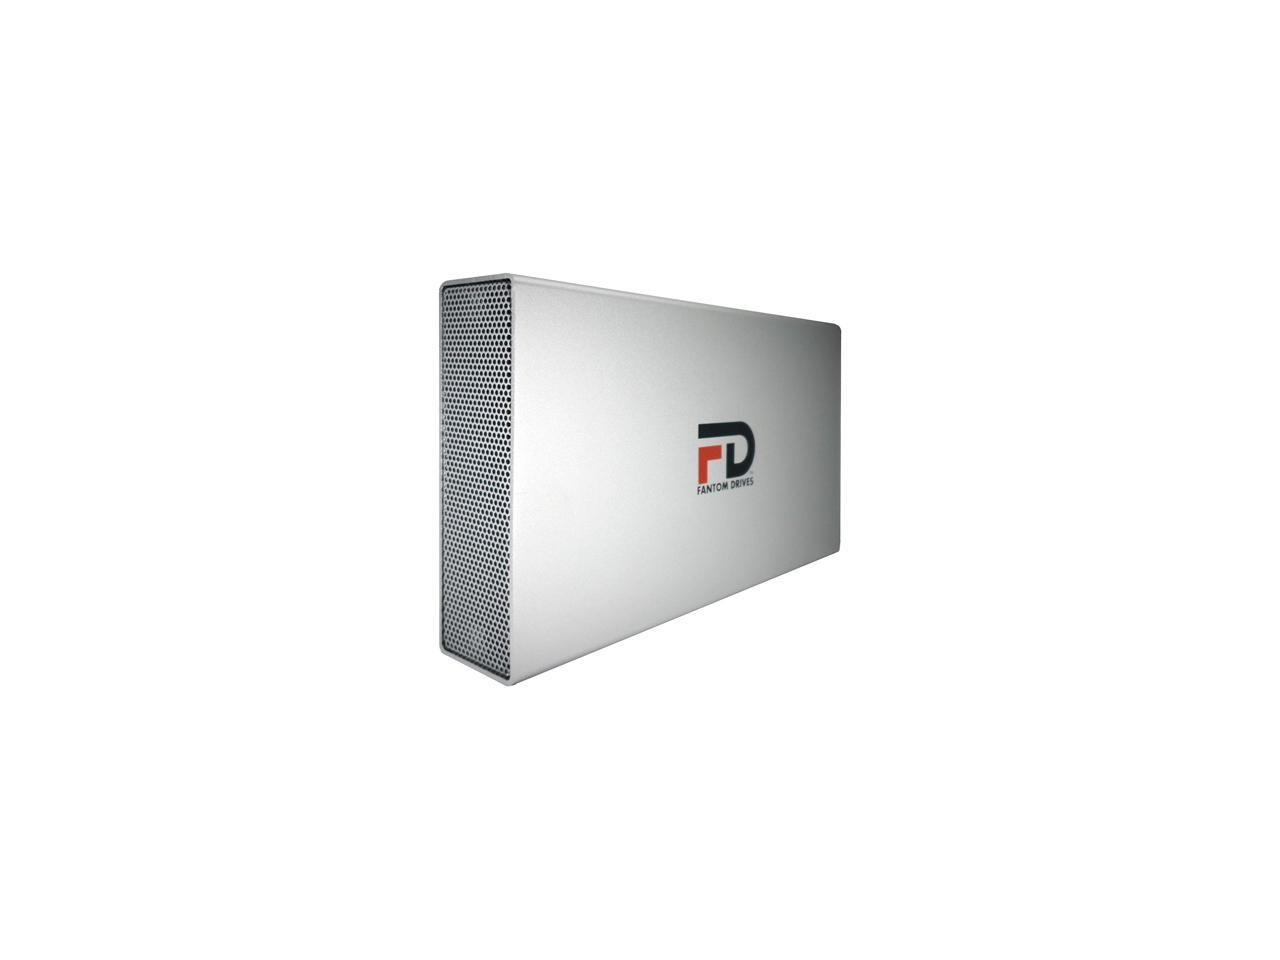 Fantom Drives Gforce 3 Pro 4Tb Usb 3.2 Gen 1 3.5" External Hard Drive Gf3S4000Up Silver